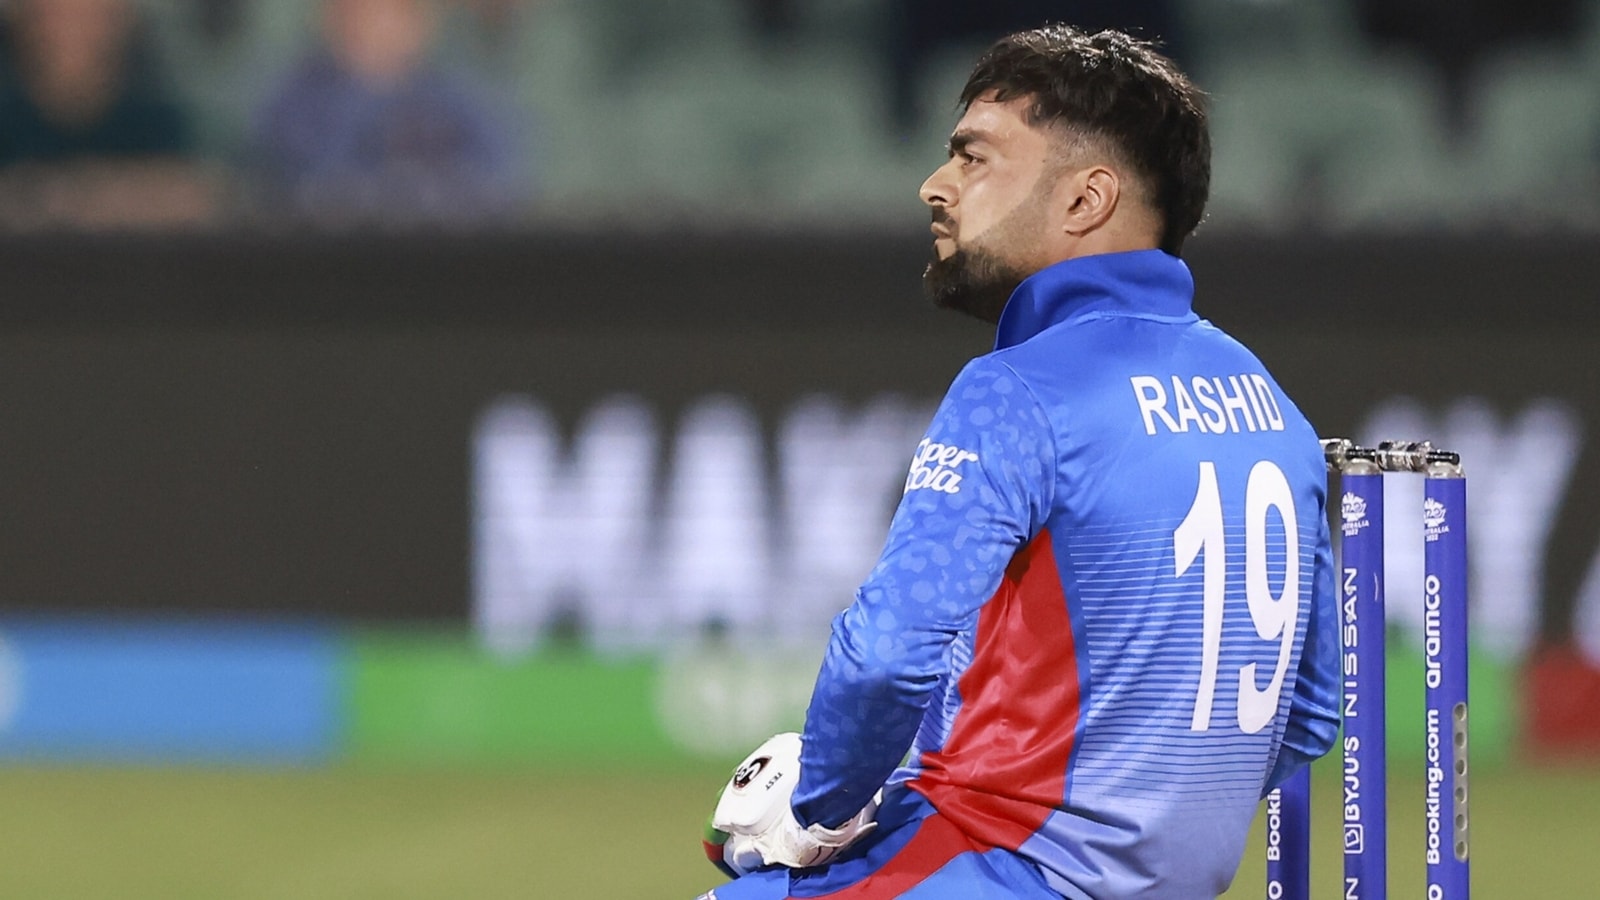 Rashid Khan threatens to leave BBL after Cricket Australia cancels ODI series Cricket